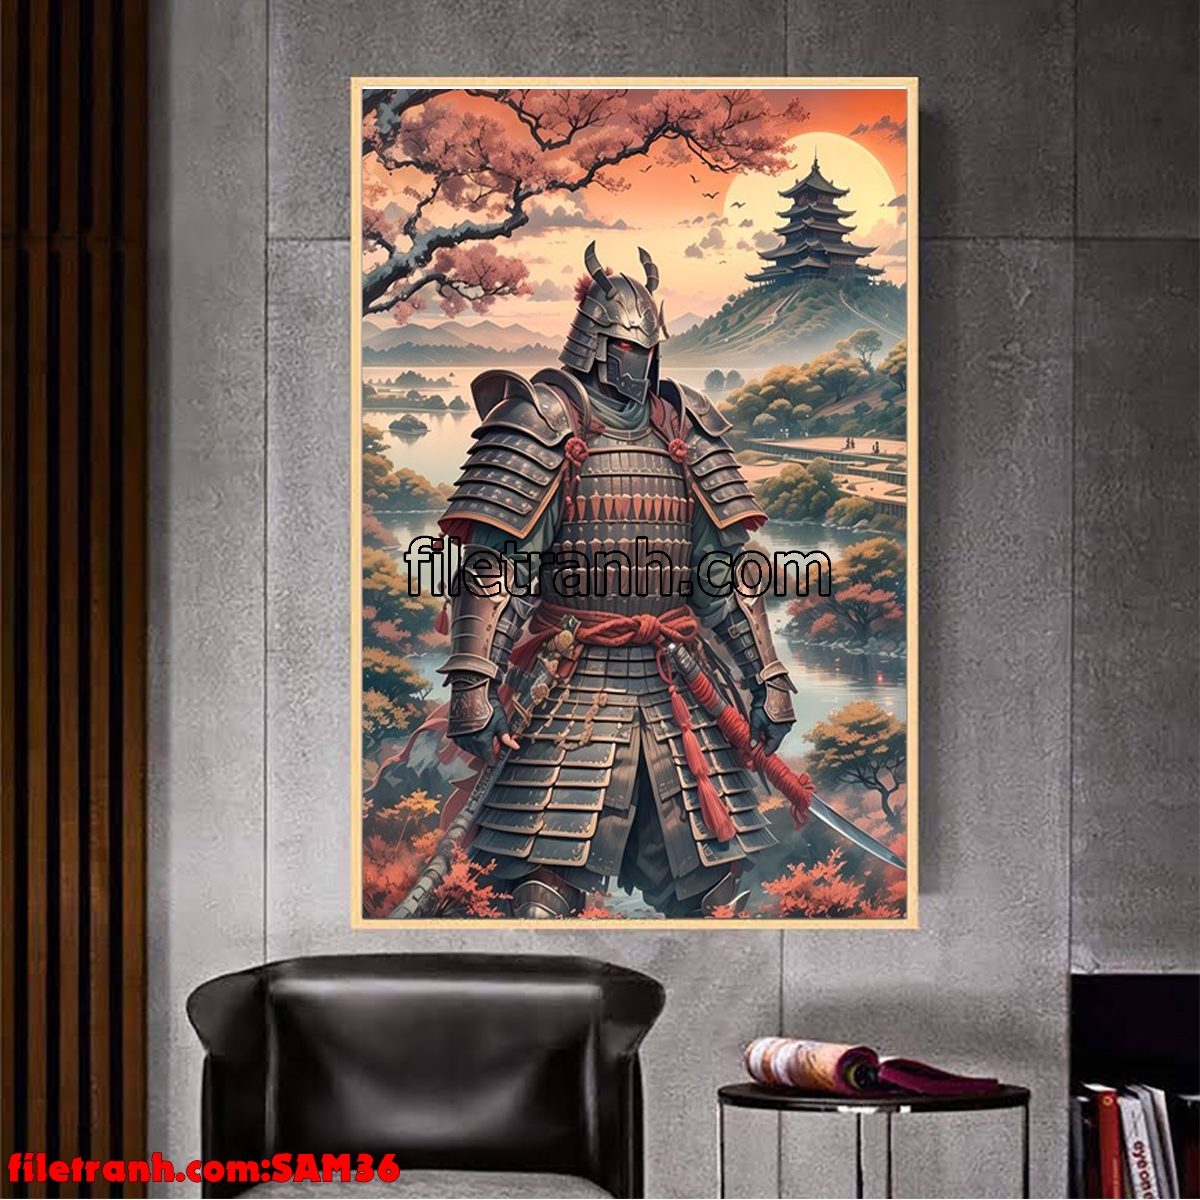 https://filetranh.com/tuong-nen/file-tranh-samurai-vo-si-nhat-ban-sam36.html